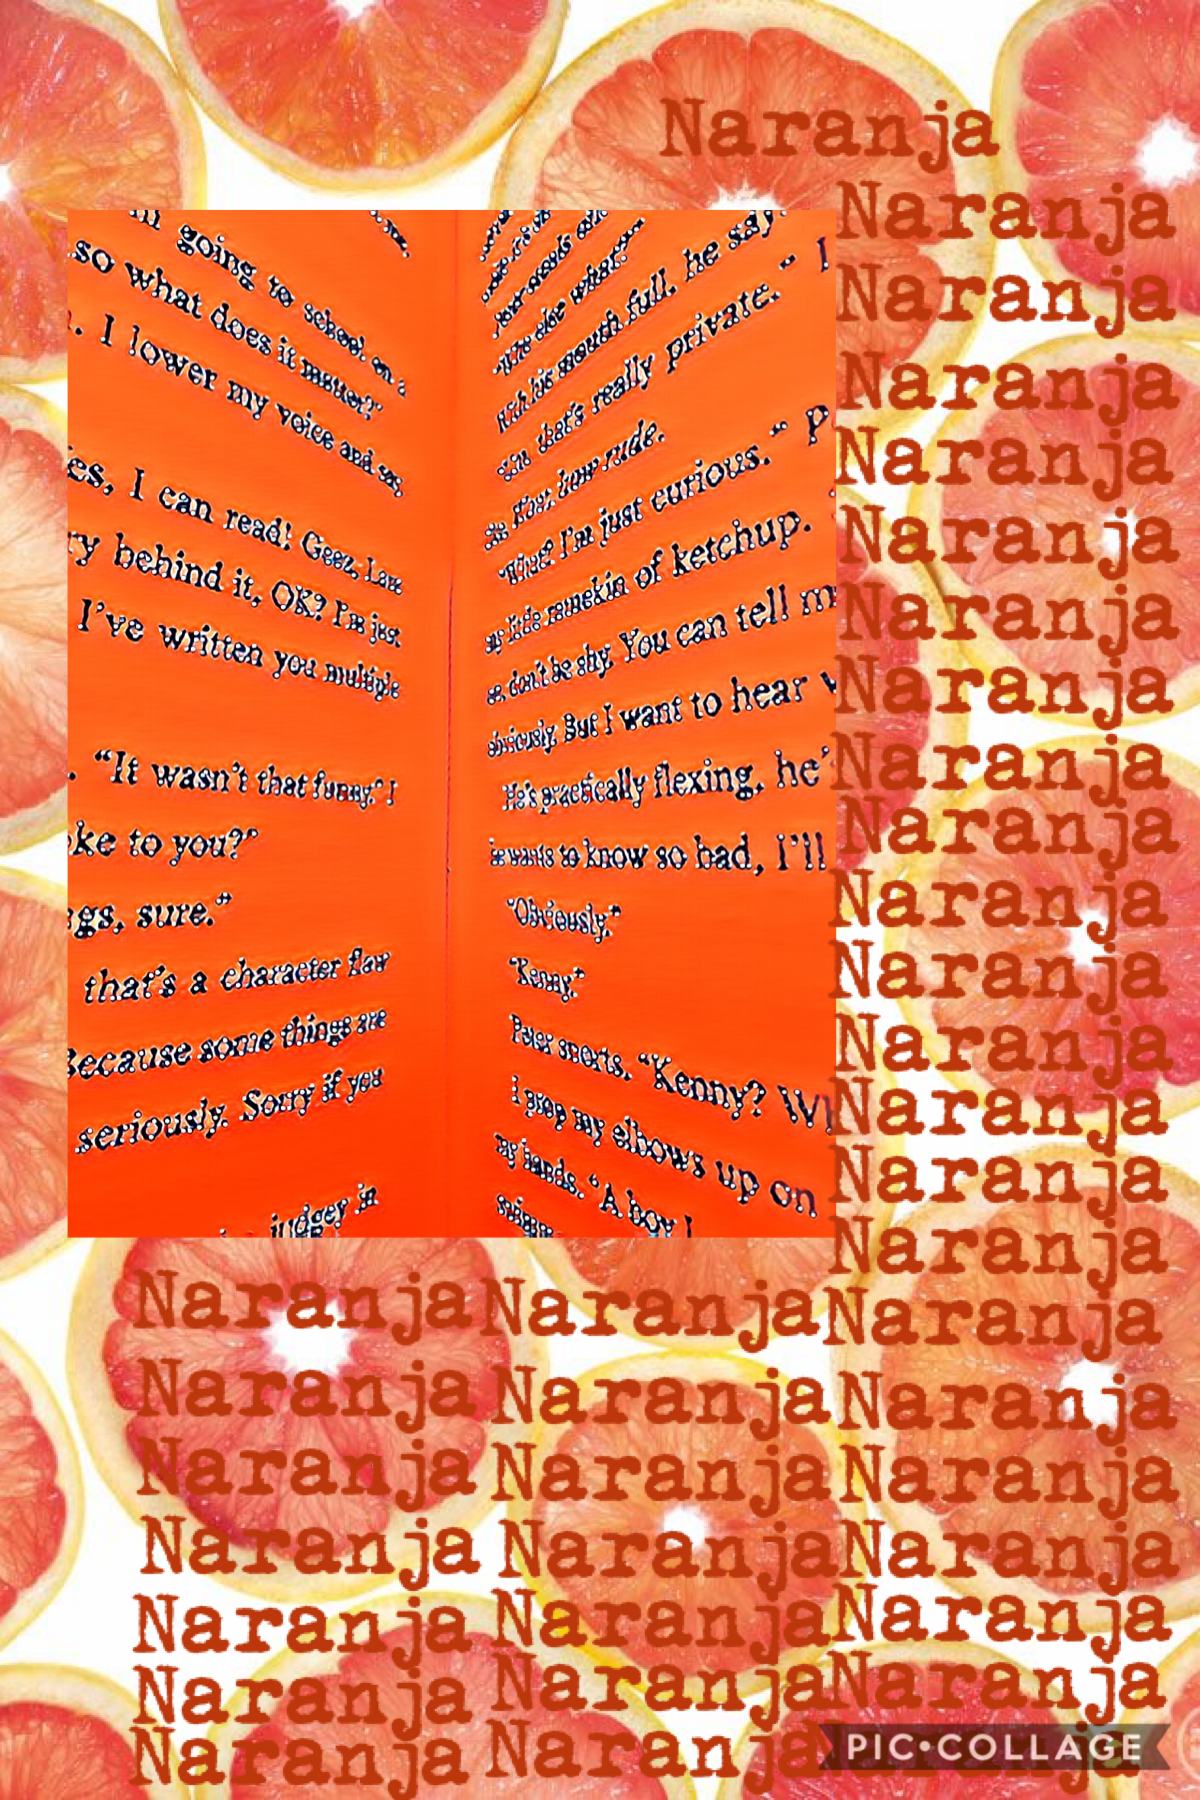 Guess what naranja means 😂🍊